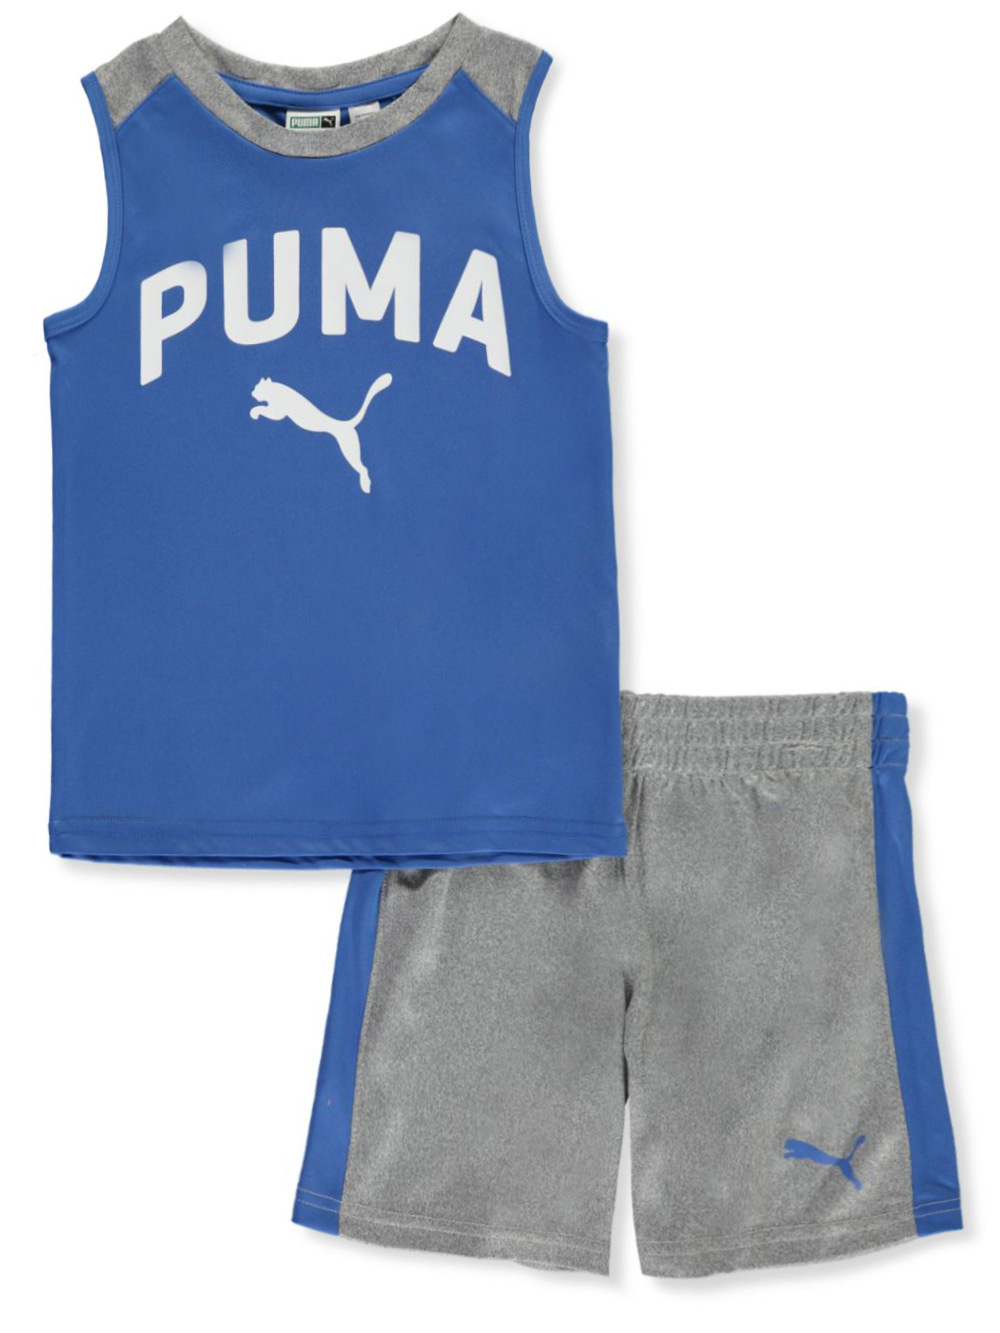 puma outfit set